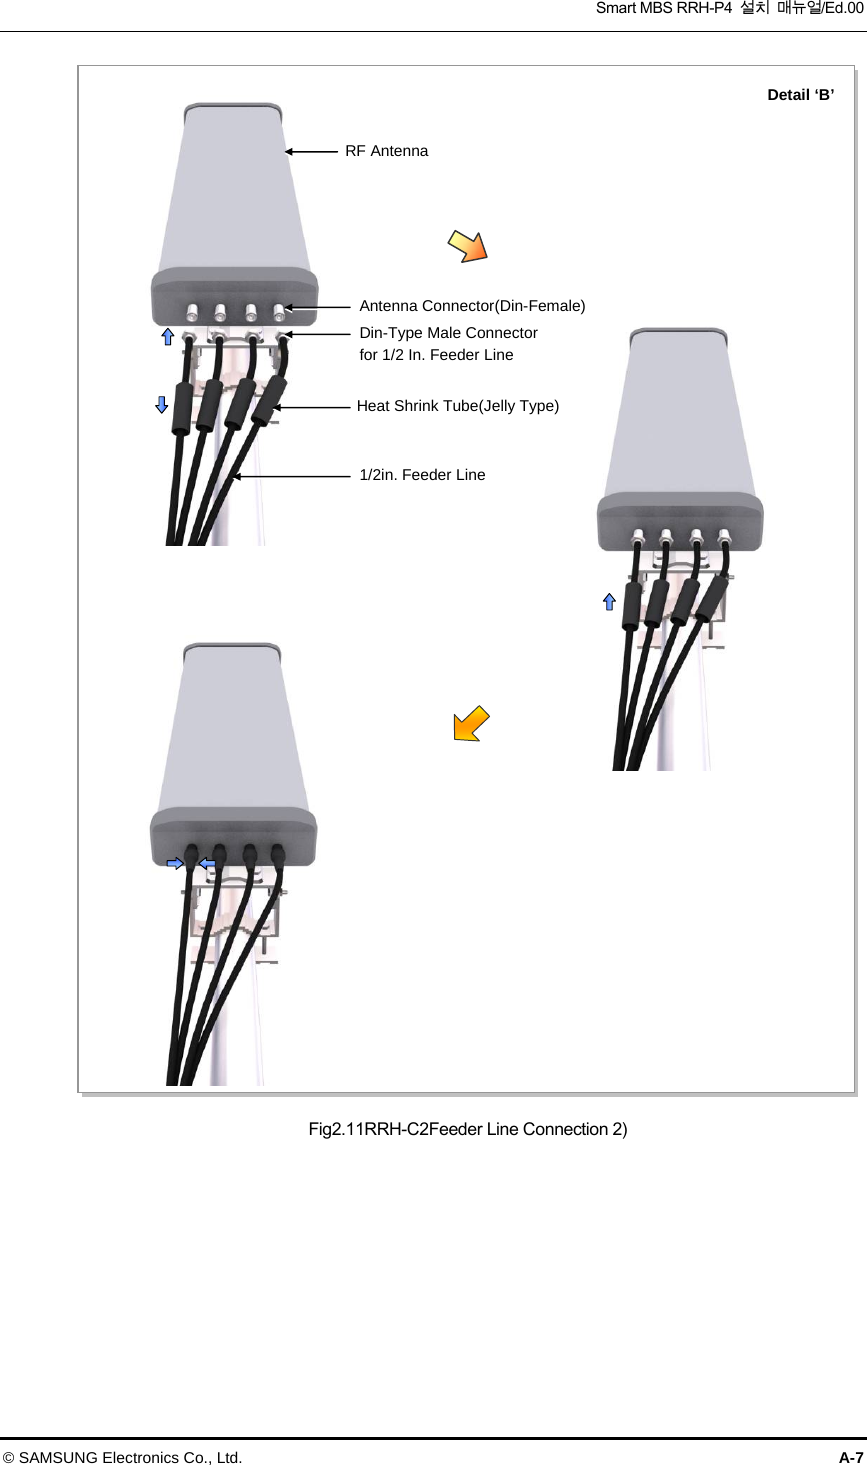  Smart MBS RRH-P4  설치  매뉴얼/Ed.00 © SAMSUNG Electronics Co., Ltd.  A-7 Fig2.11RRH-C2Feeder Line Connection 2) Antenna Connector(Din-Female) 1/2in. Feeder Line Heat Shrink Tube(Jelly Type) RF Antenna Detail ‘B’ Din-Type Male Connector for 1/2 In. Feeder Line 